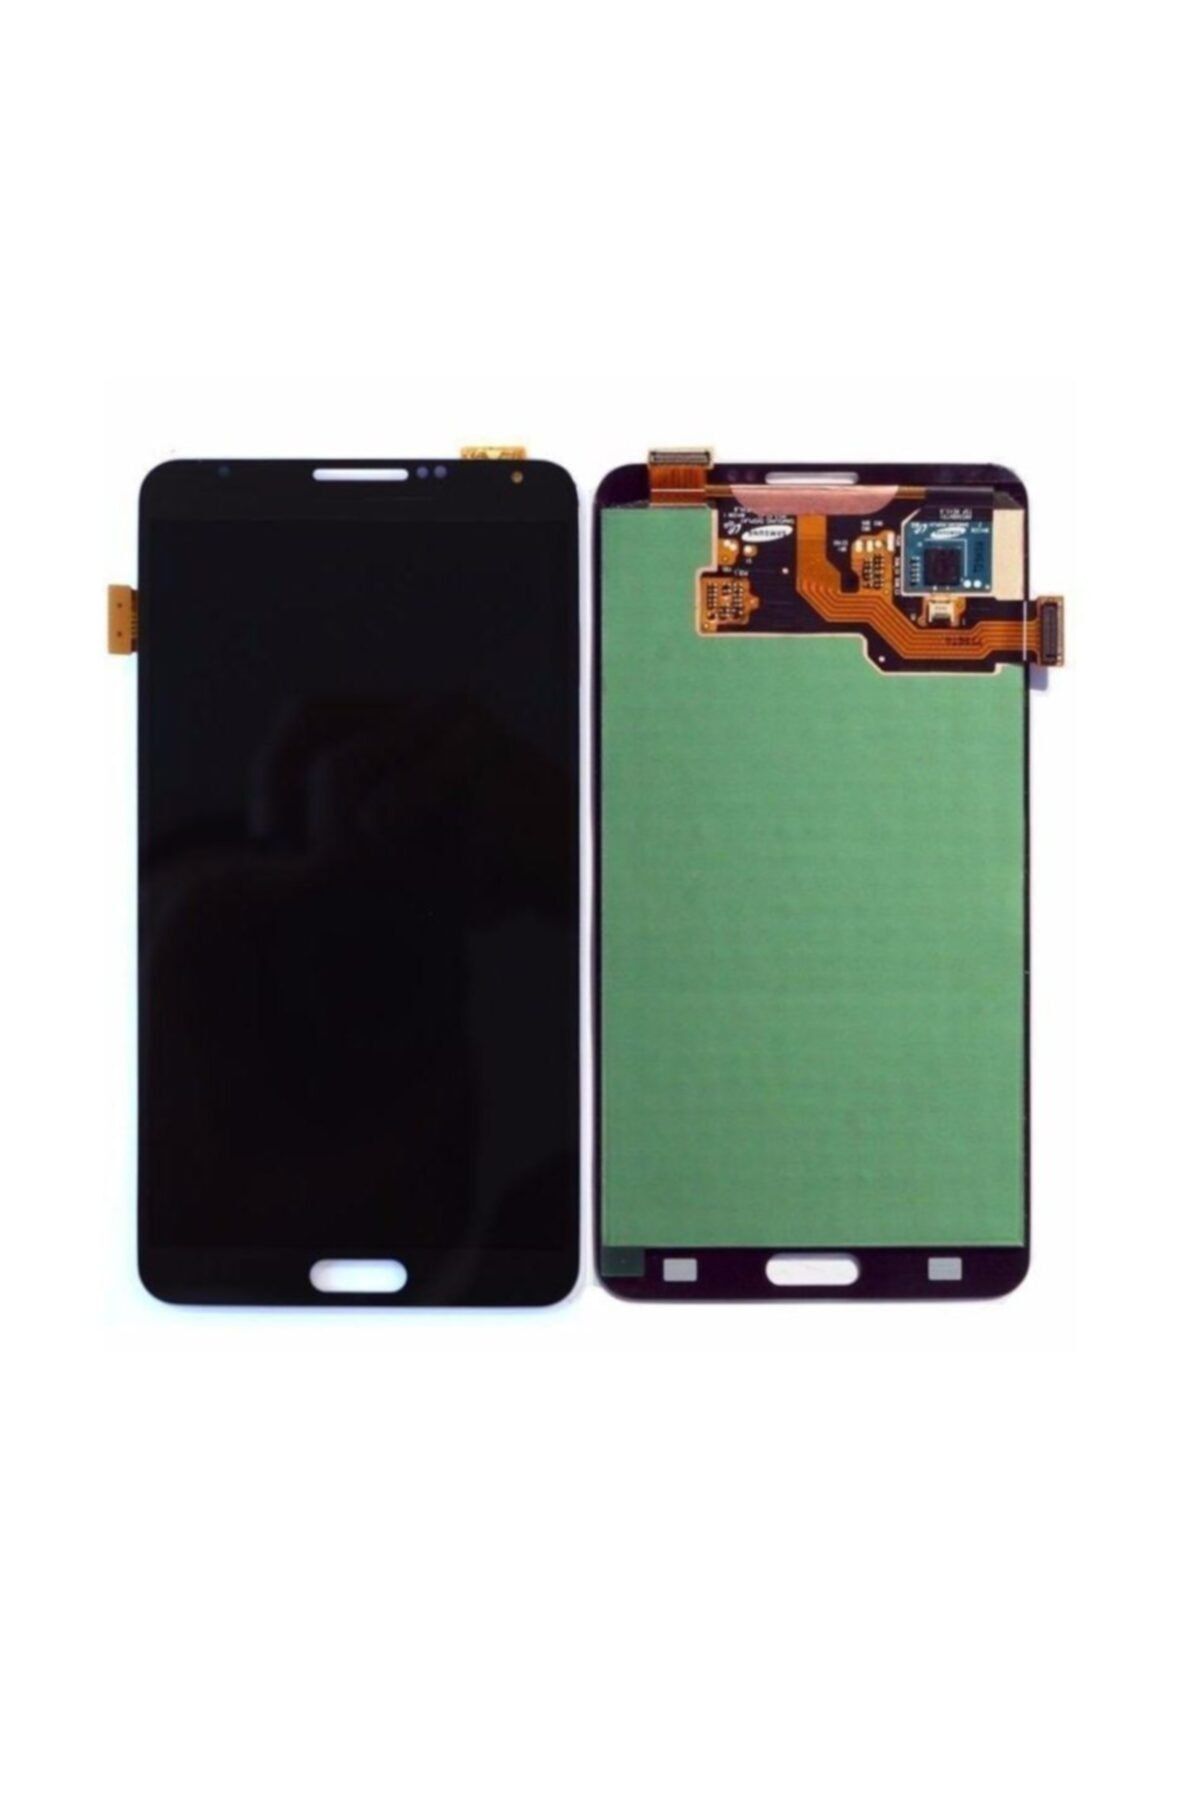 LuxTeknik Samsung Galaxy Note 3 N9000 Uyumlu Lcd Dokunmatikli Oled Ekran